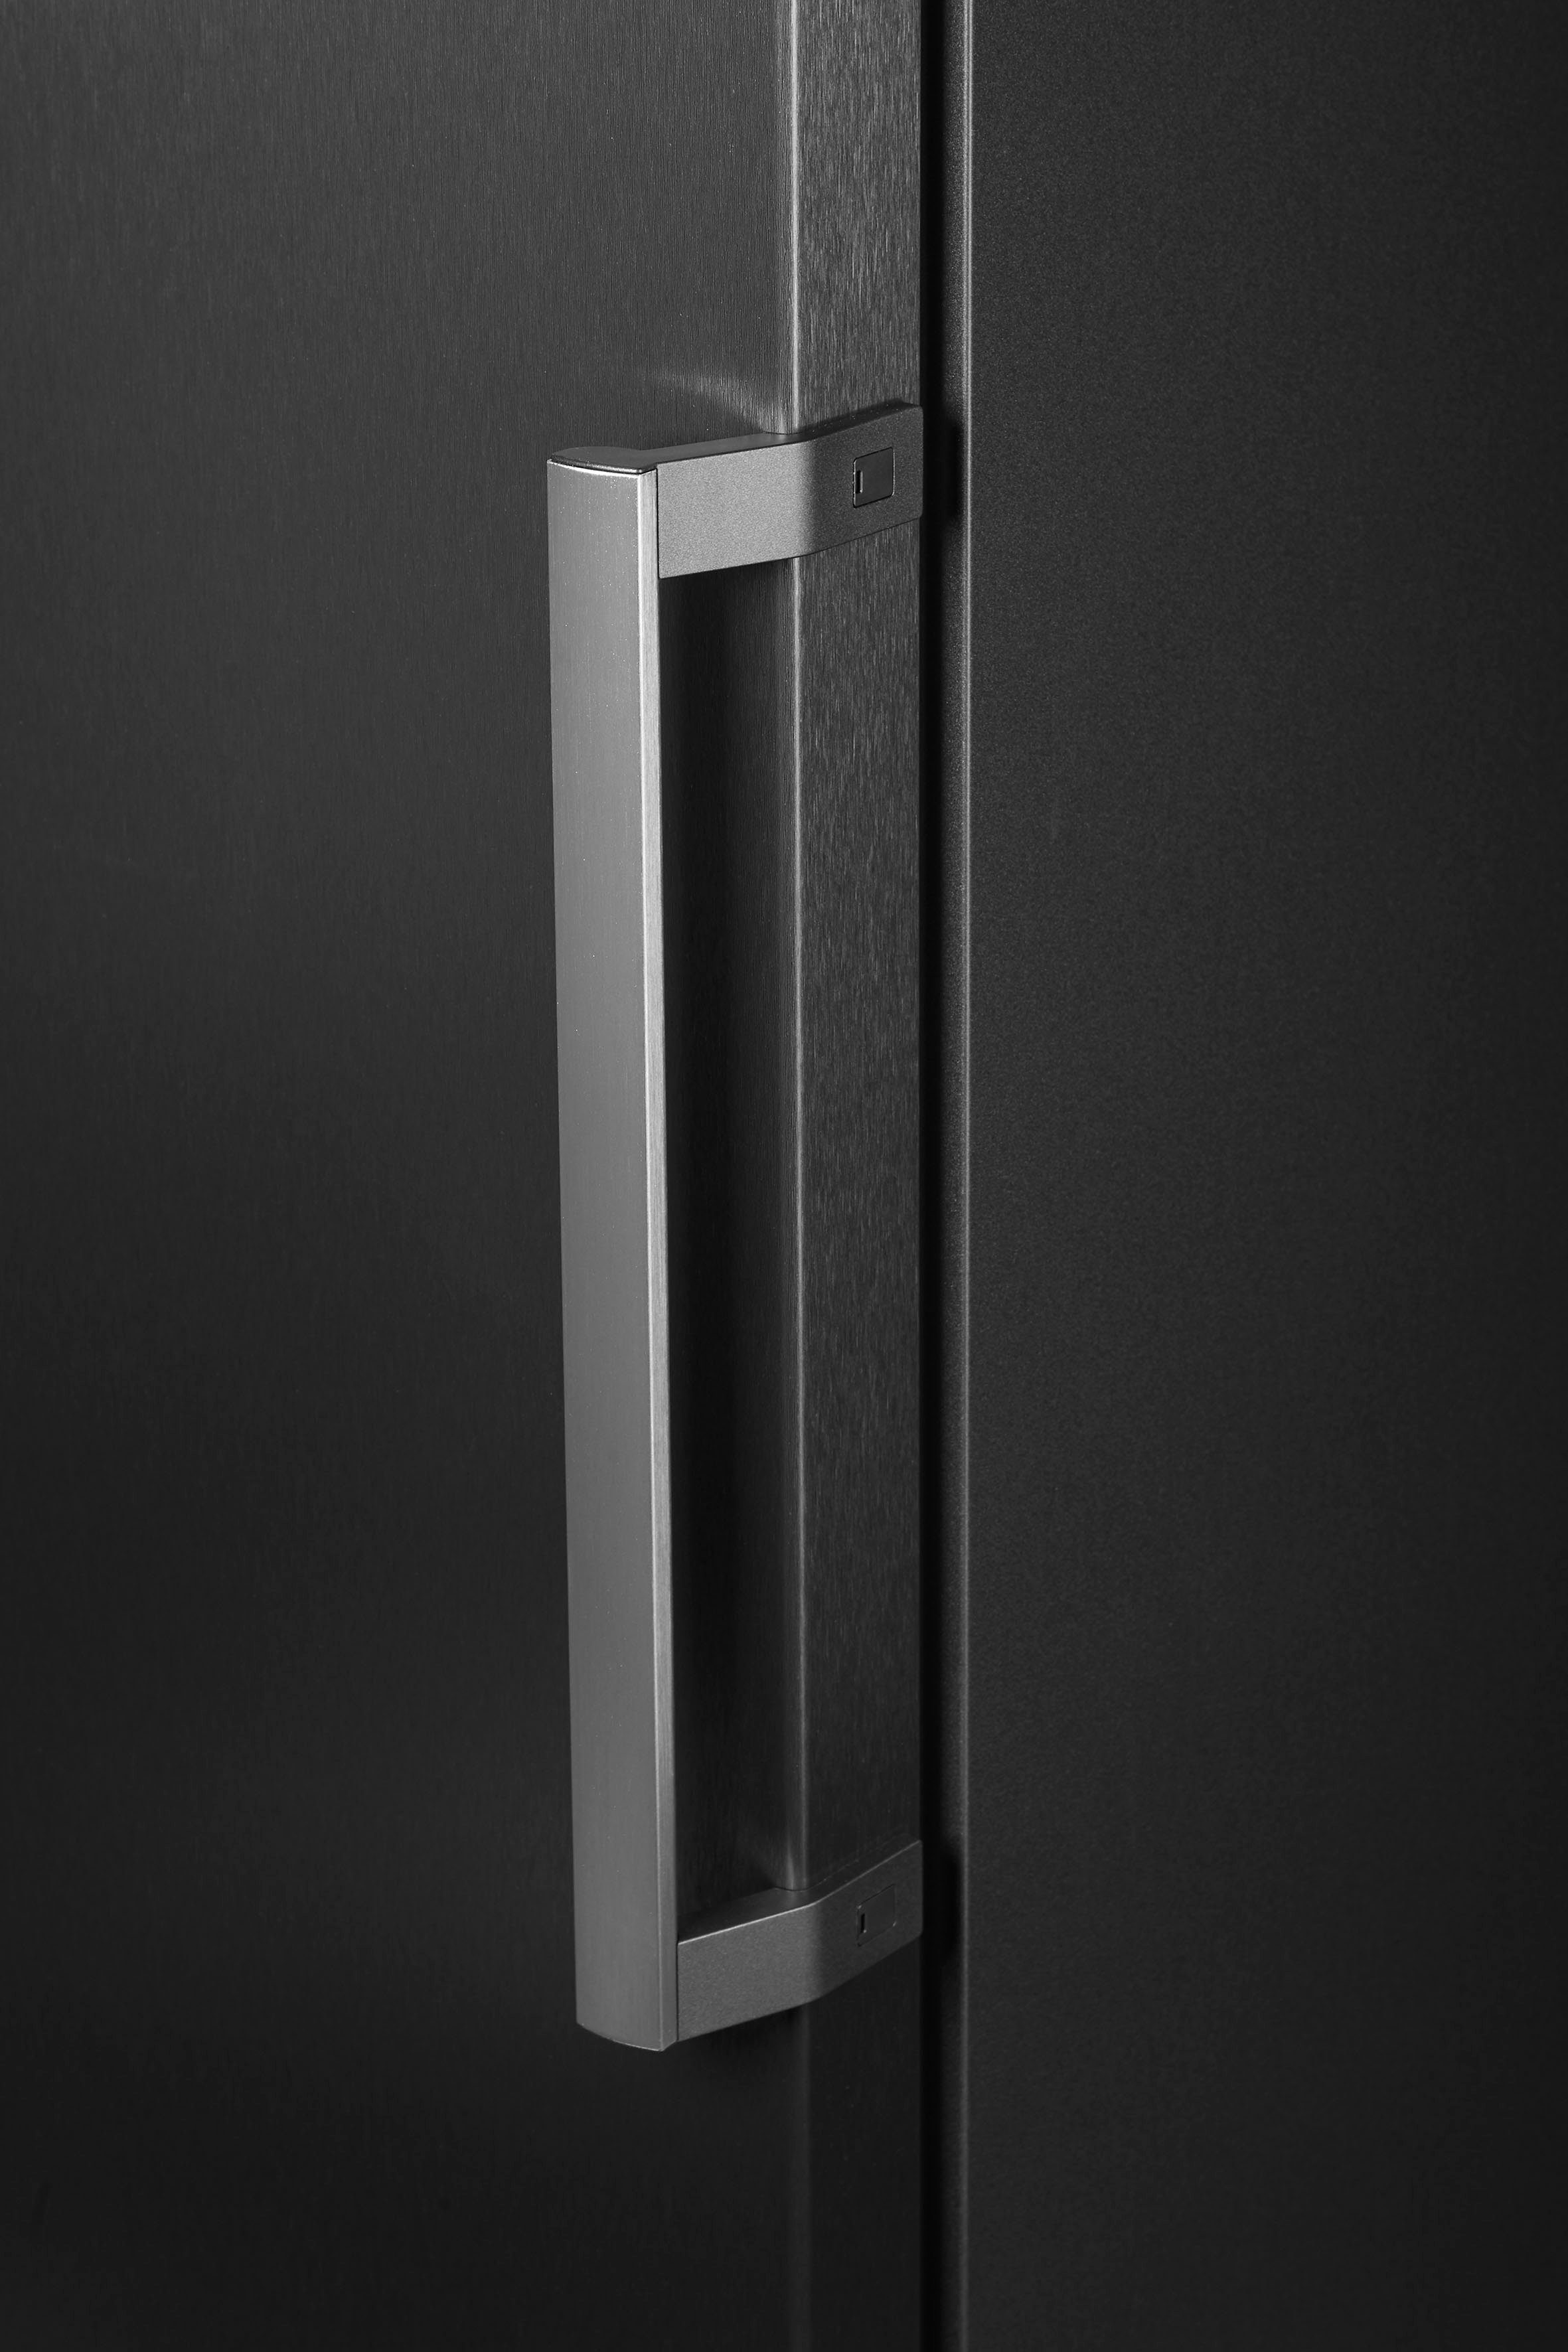 BOSCH Kühlschrank KSV36VXEP, hoch, 186 60 cm breit cm